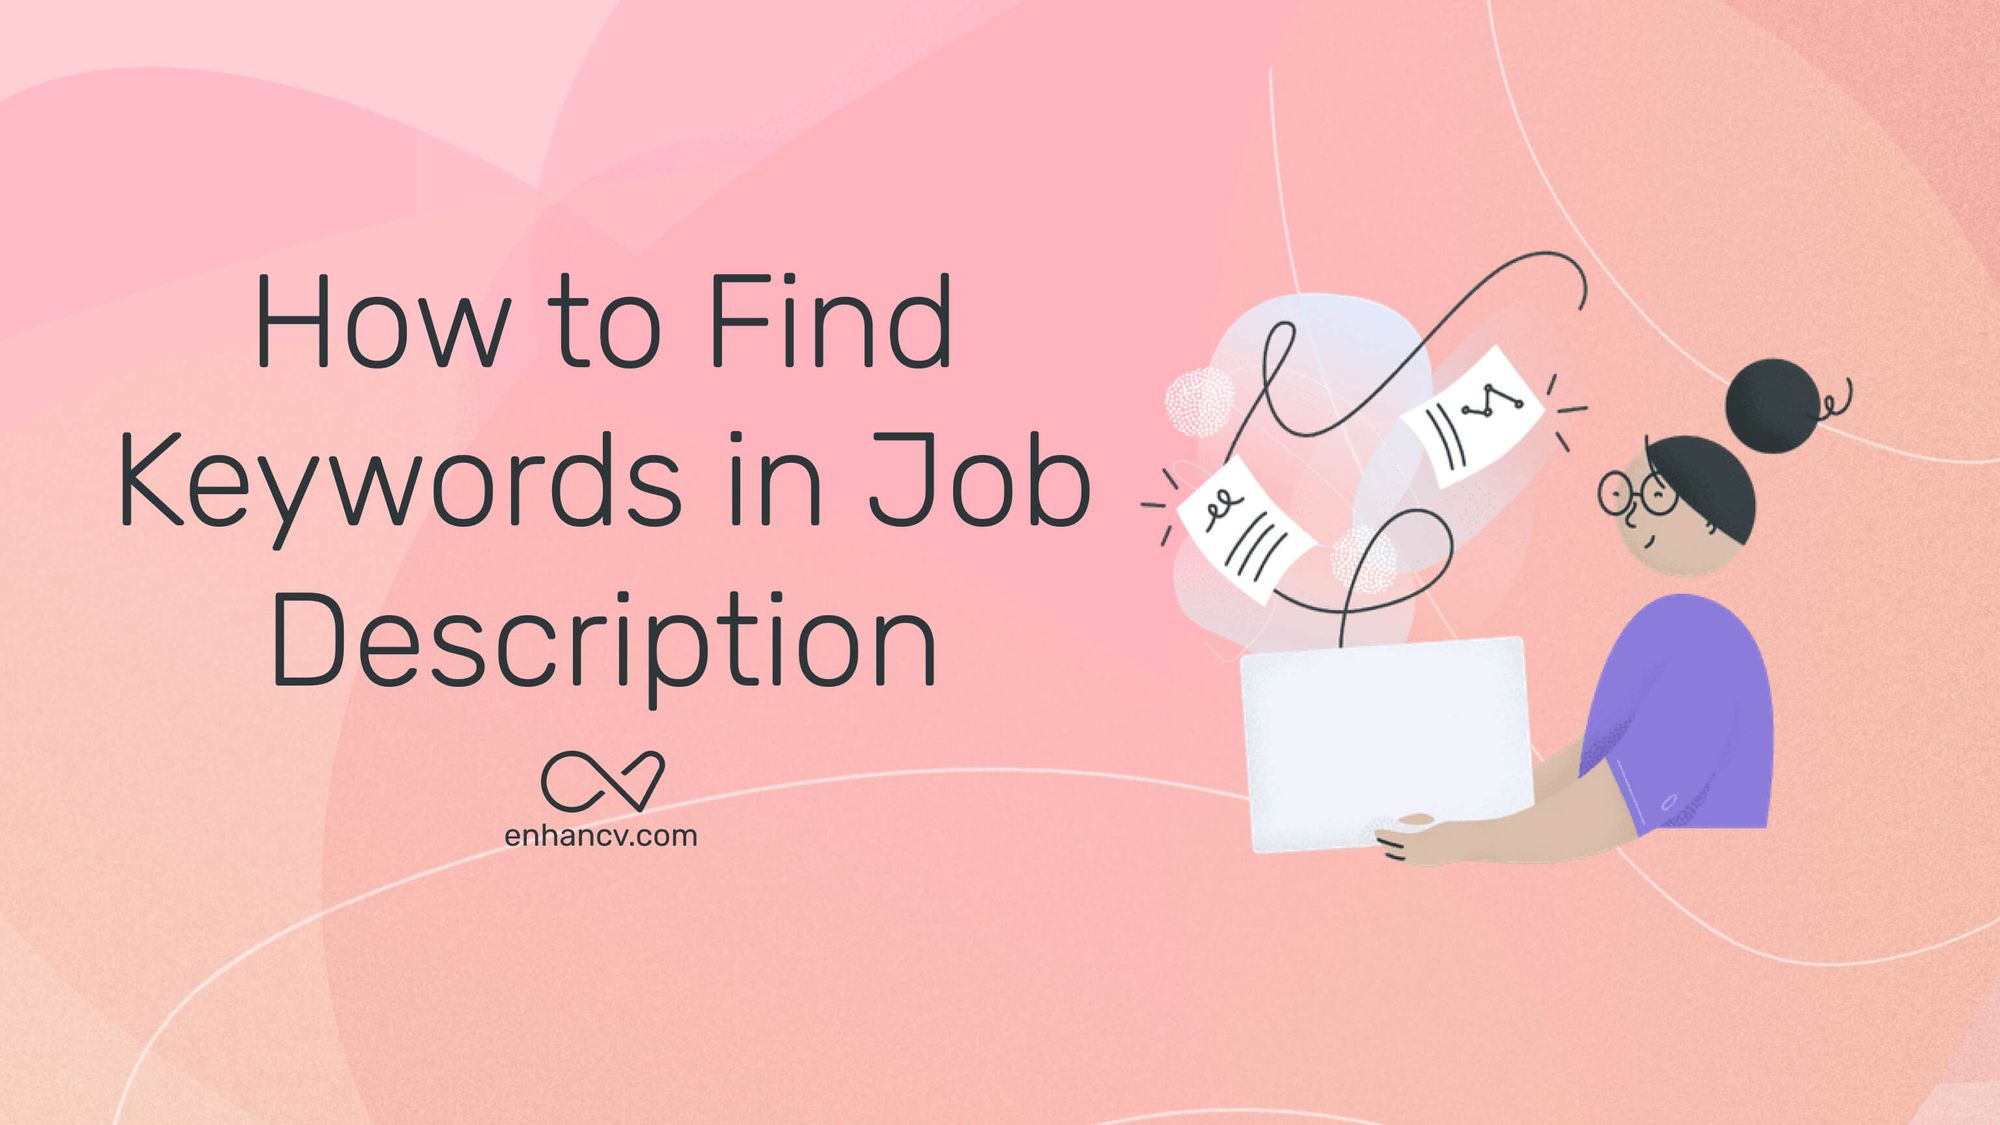 The Secret to Finding Keywords in Job Descriptions